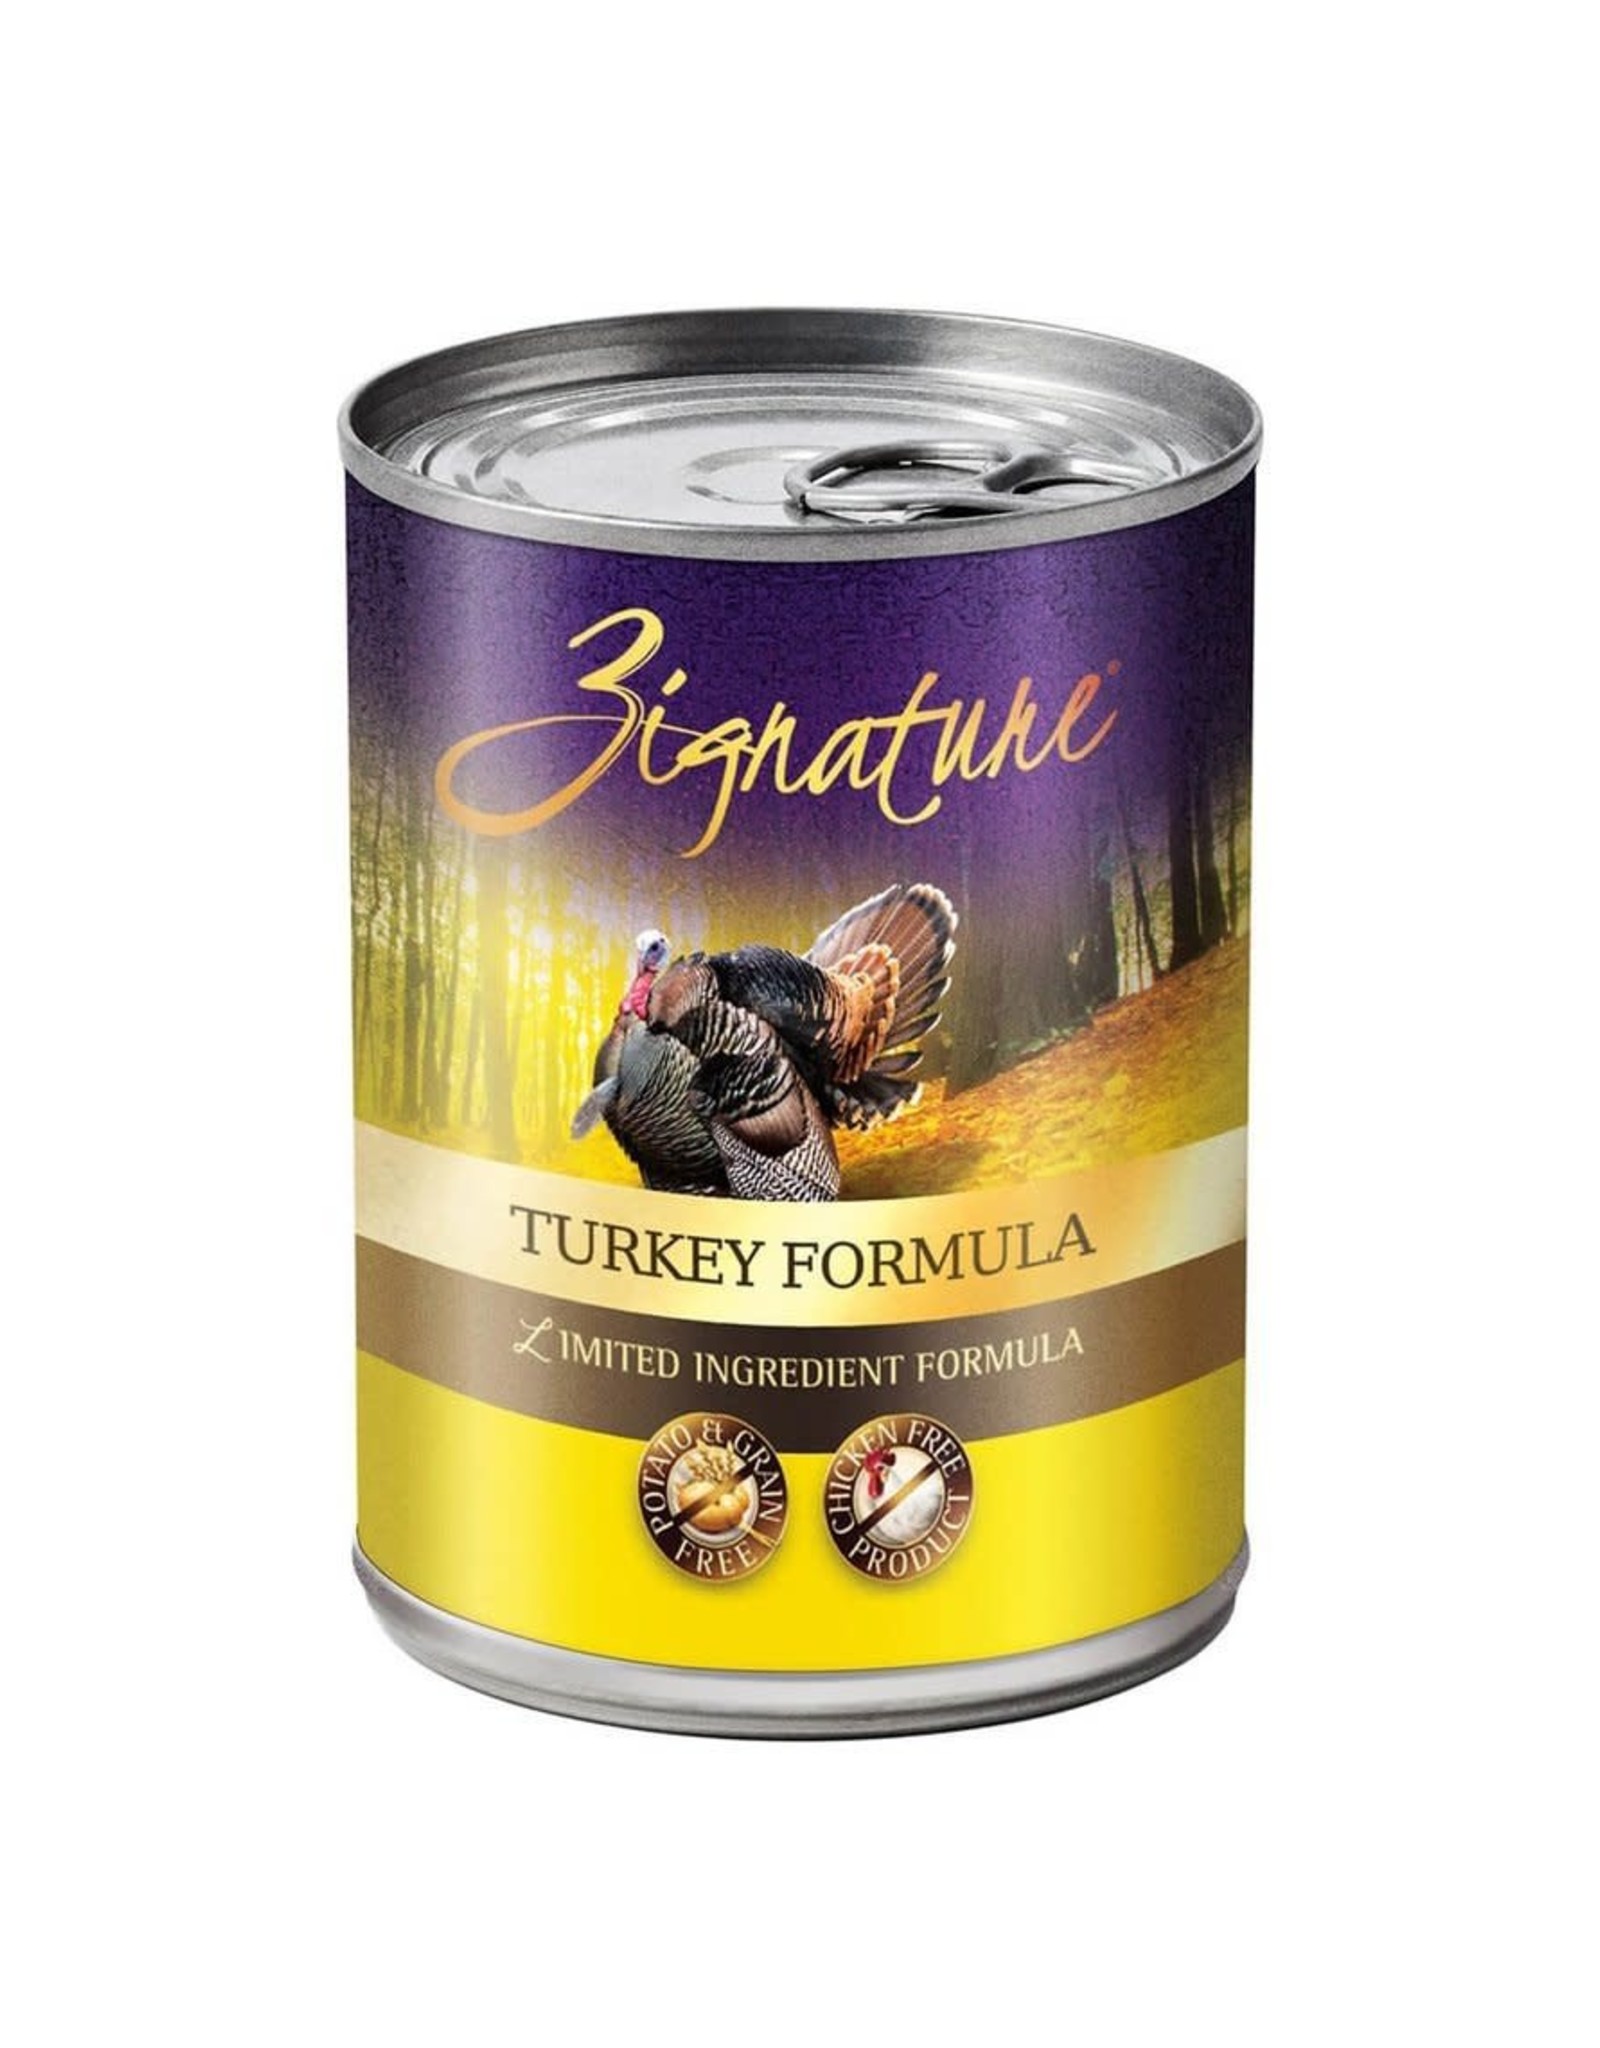 PETS GLOBAL Zignature Limited Ingredient Grain Free Canned Dog Food - Turkey 13 oz